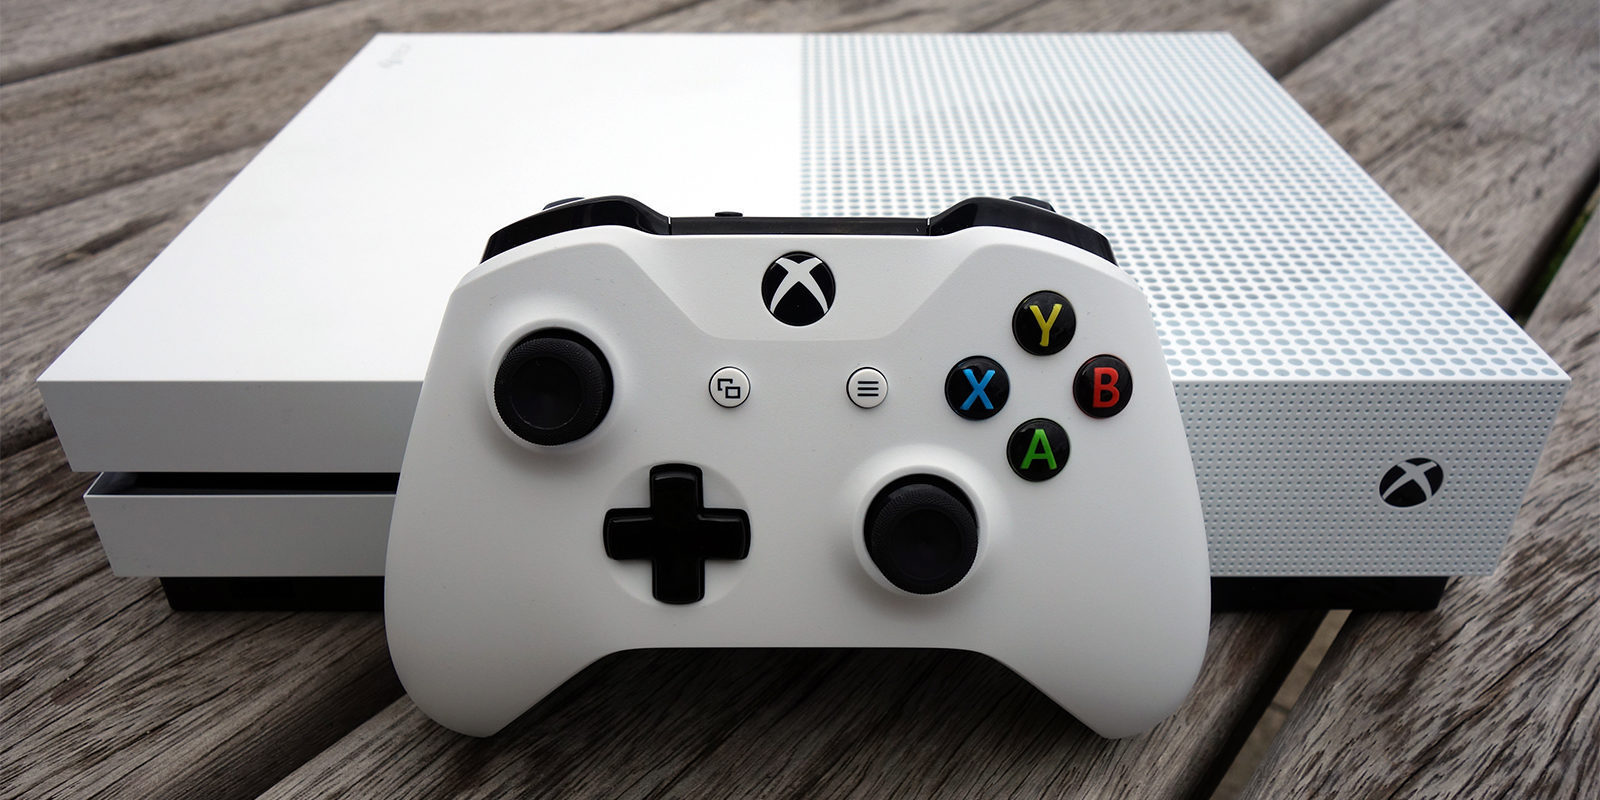 GAME anuncia un nuevo plan renove con Xbox One S